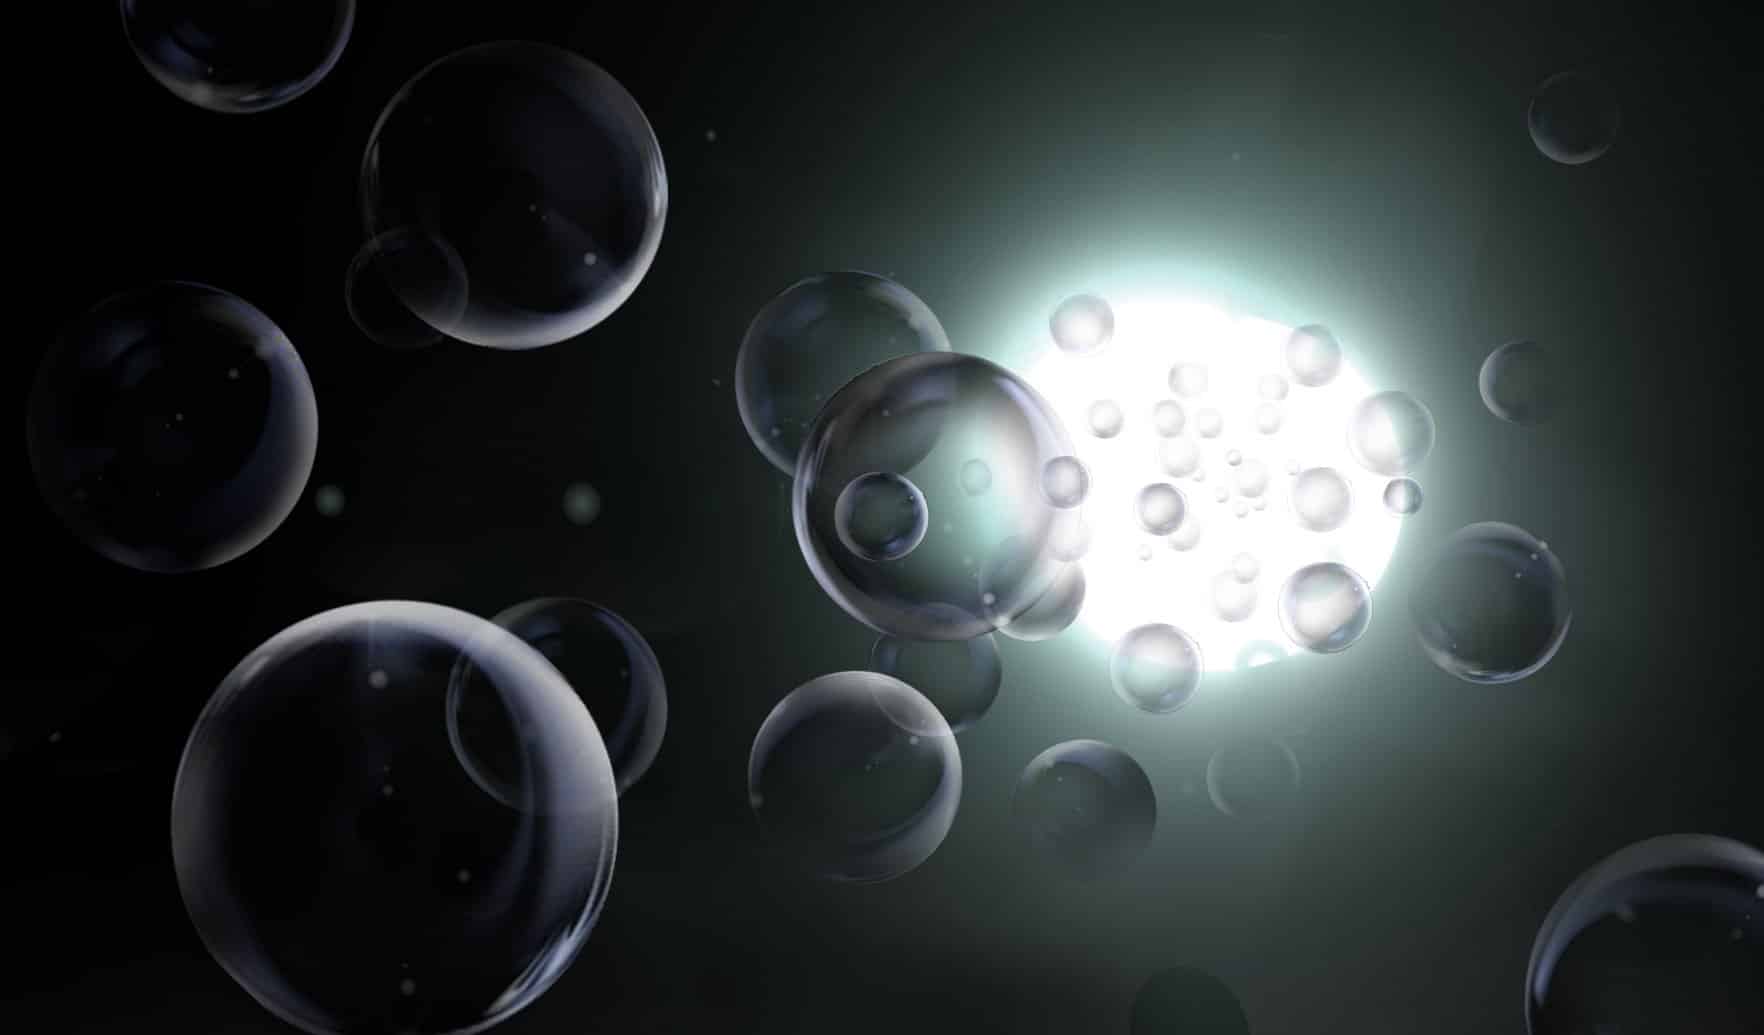 Image source: Space Bubbles Project / MIT